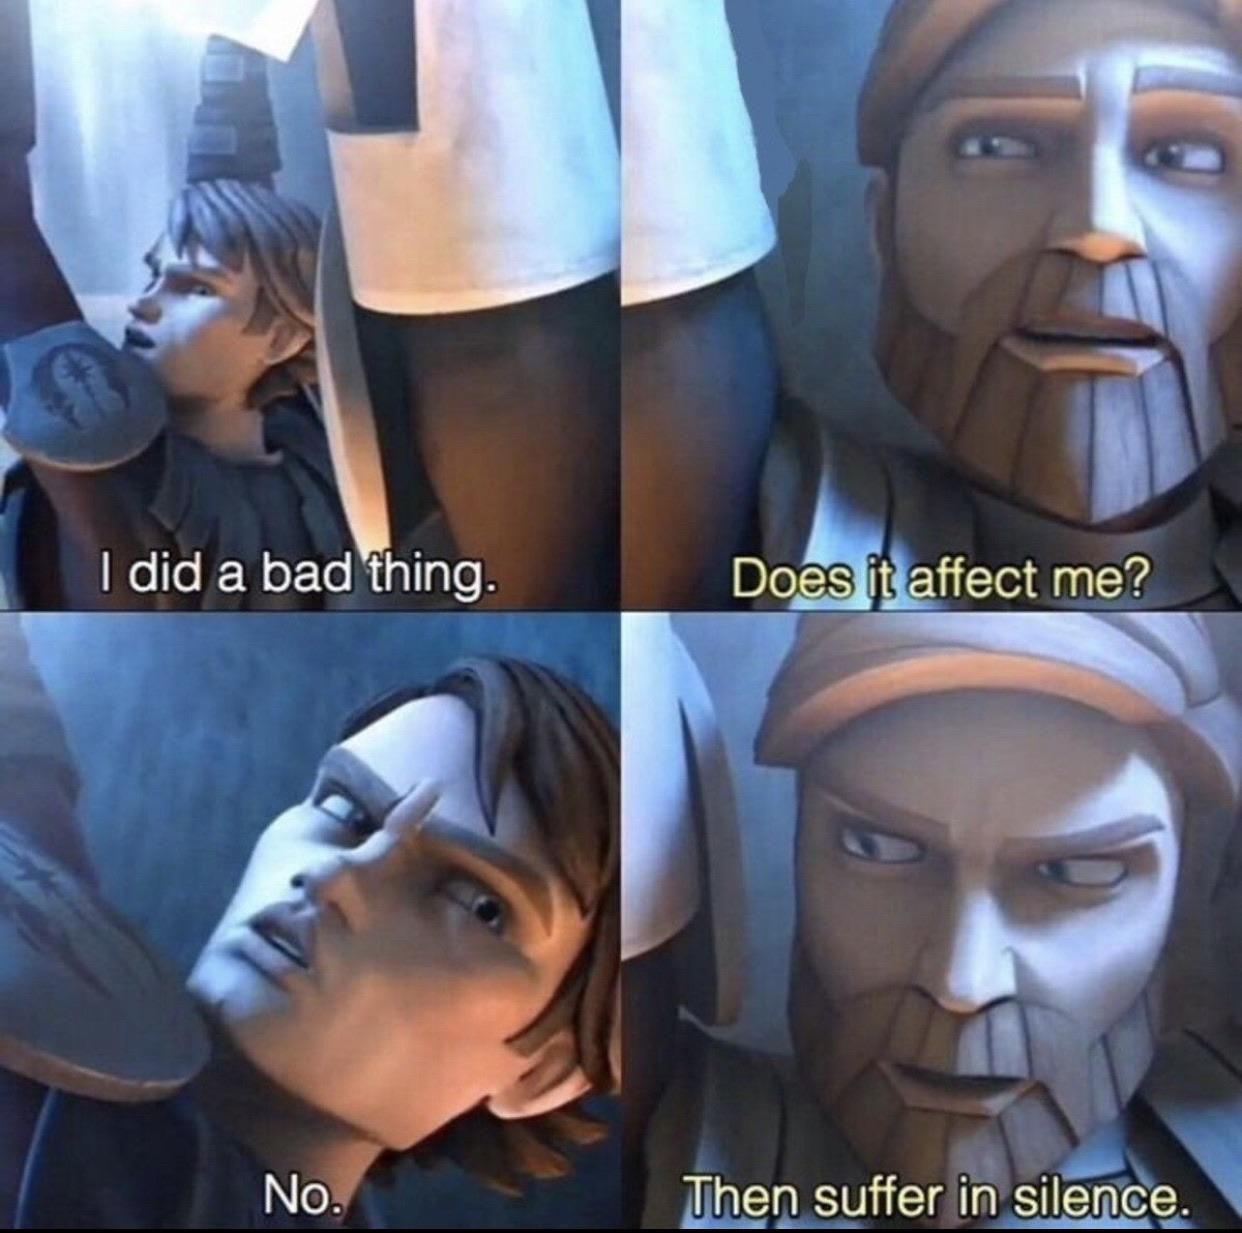 The wisdom of Obi-Wan